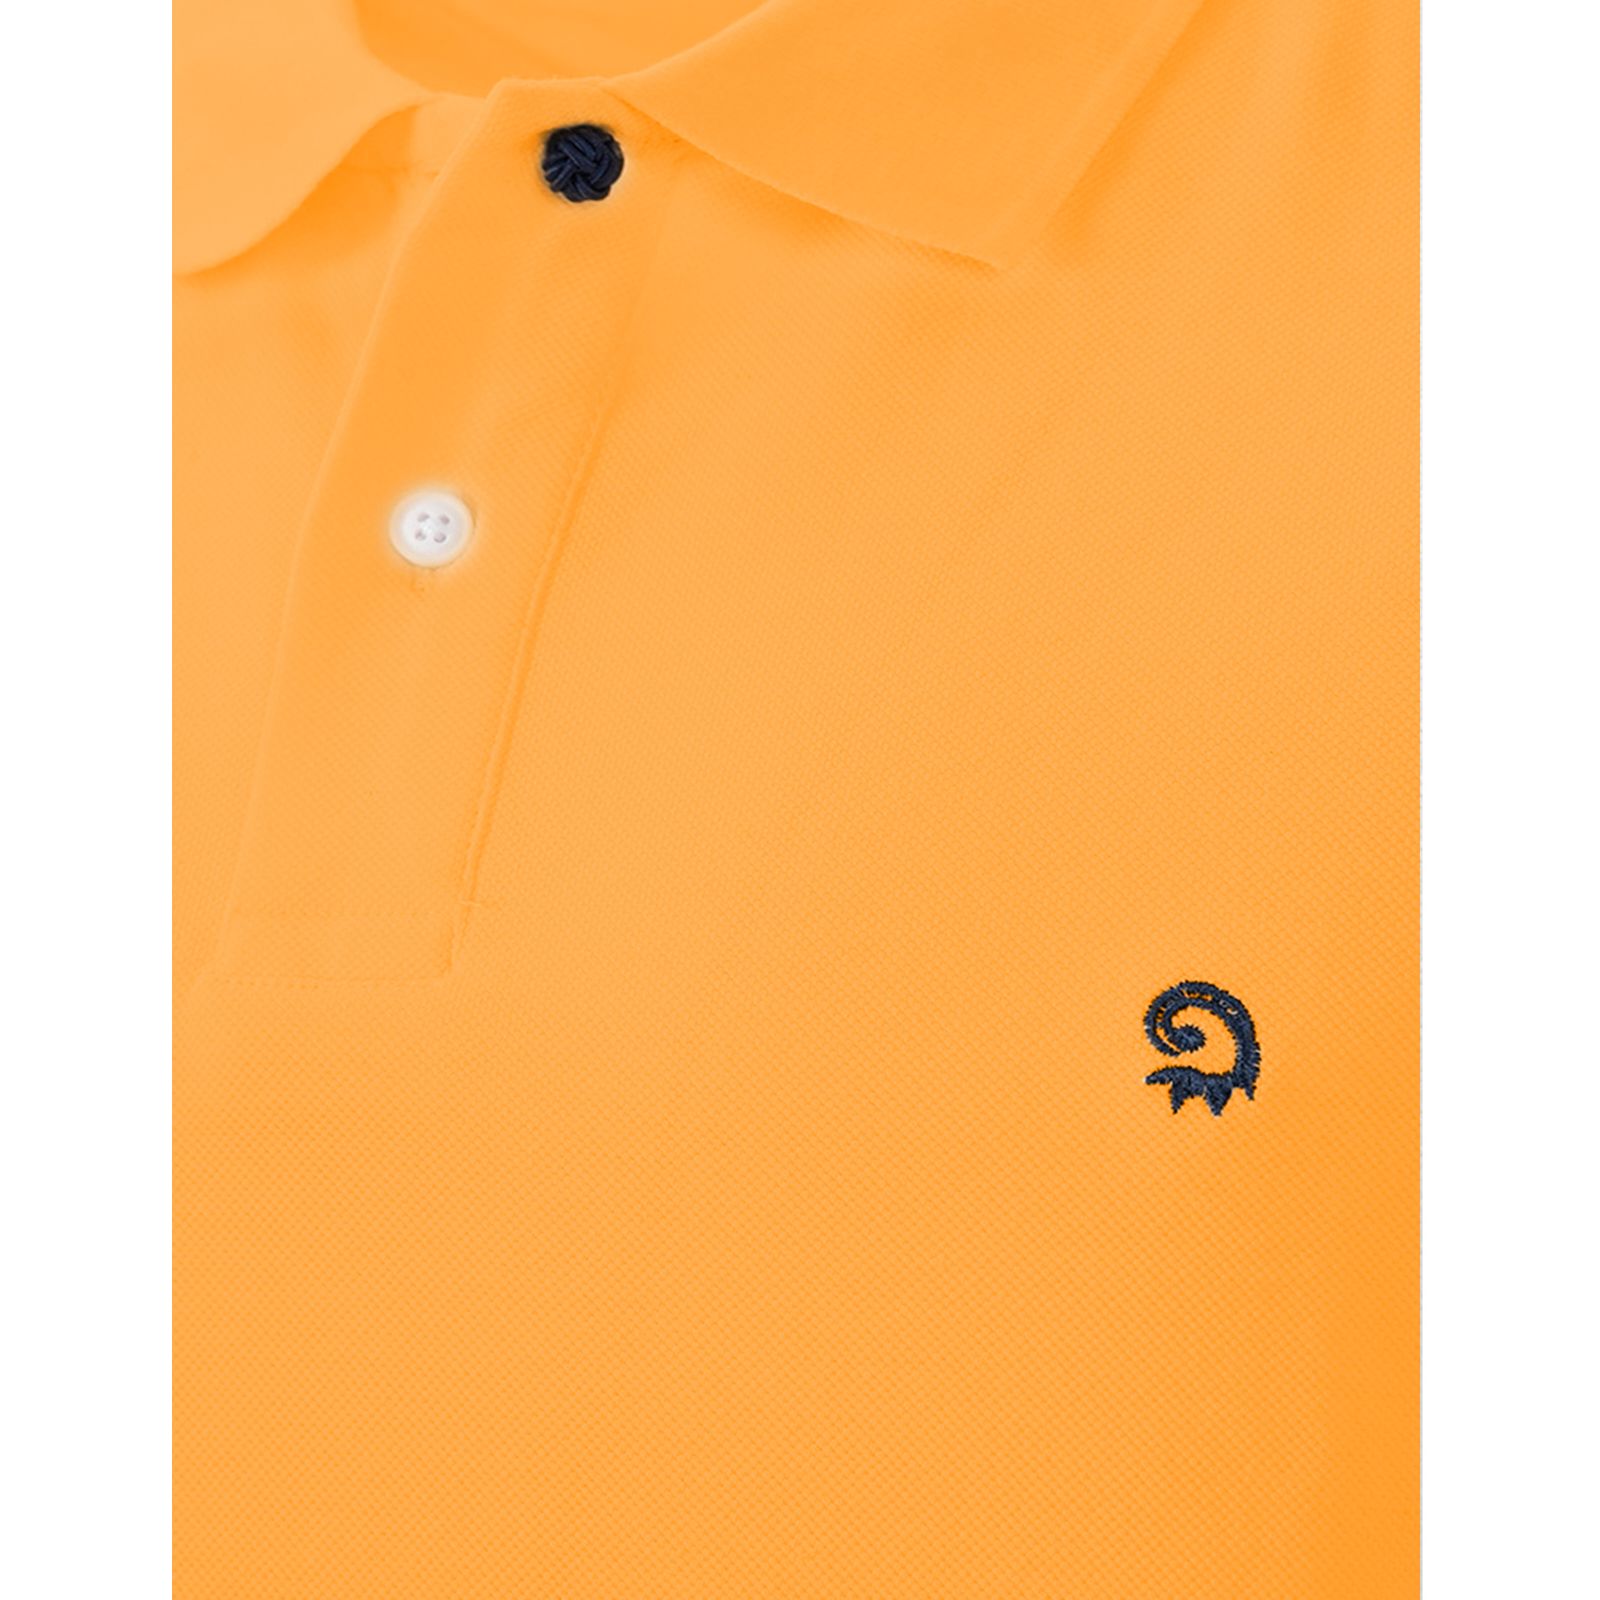 پولوشرت آستین کوتاه مردانه بادی اسپینر مدل 06960358 کد 3 رنگ زرد -  - 4